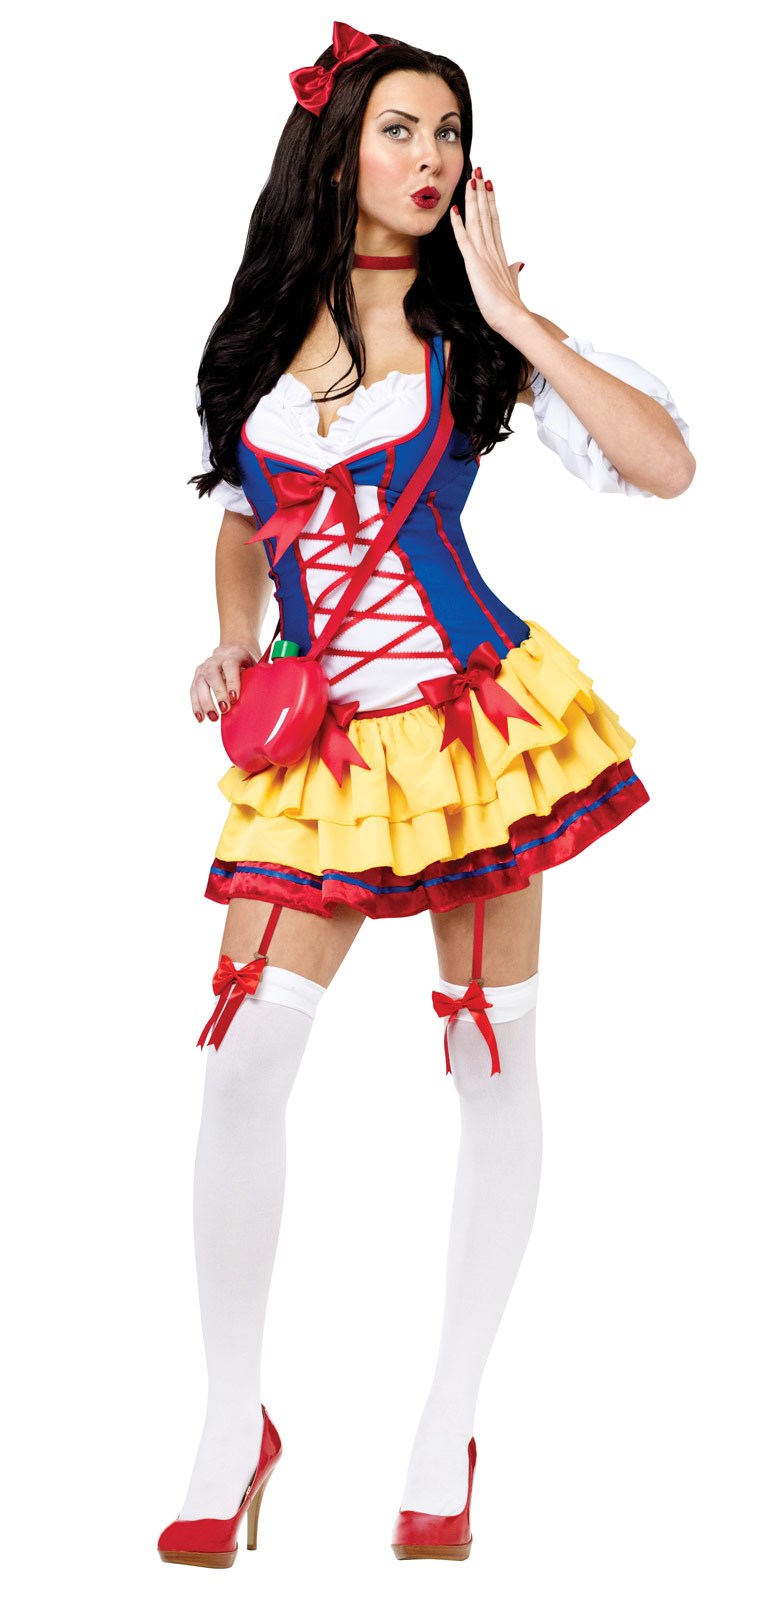 One Bad Apple Snow White Adult Costume